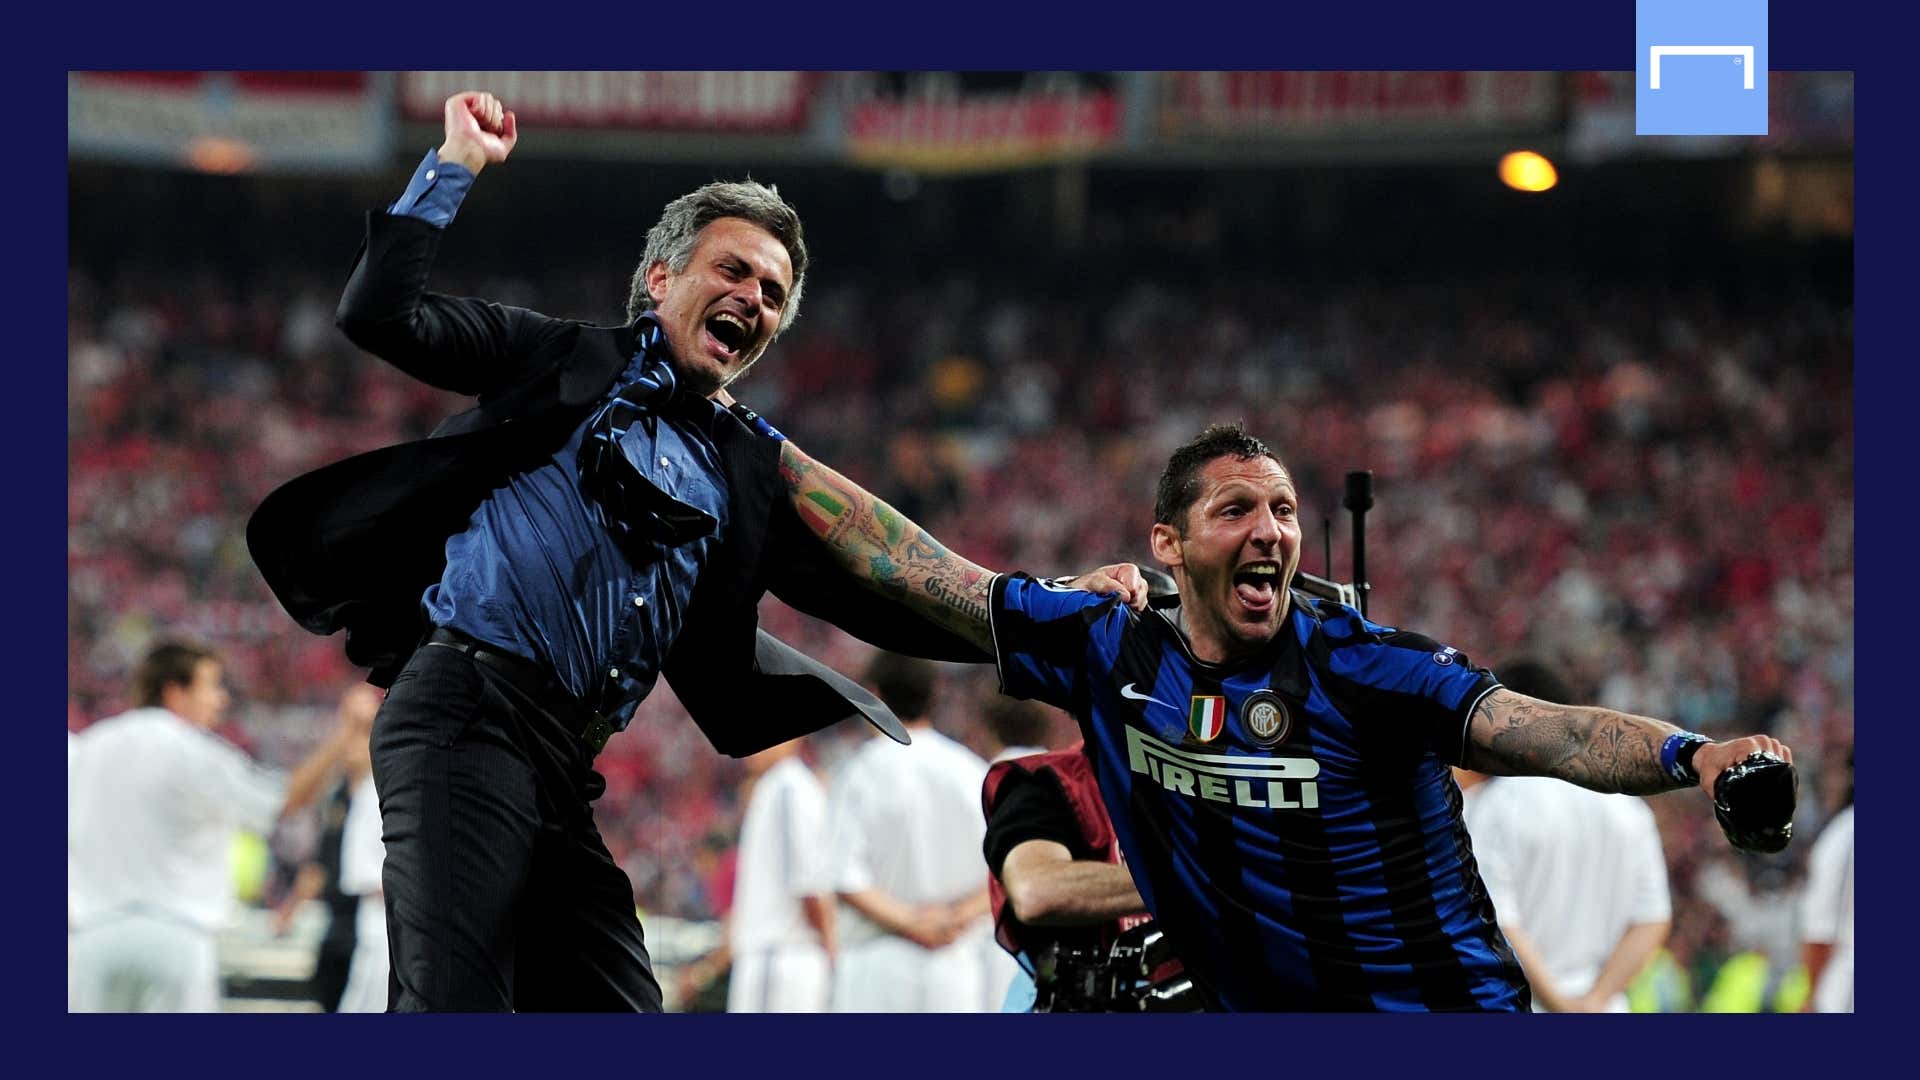 Jose Mourinho Inter 2010 Champions League final